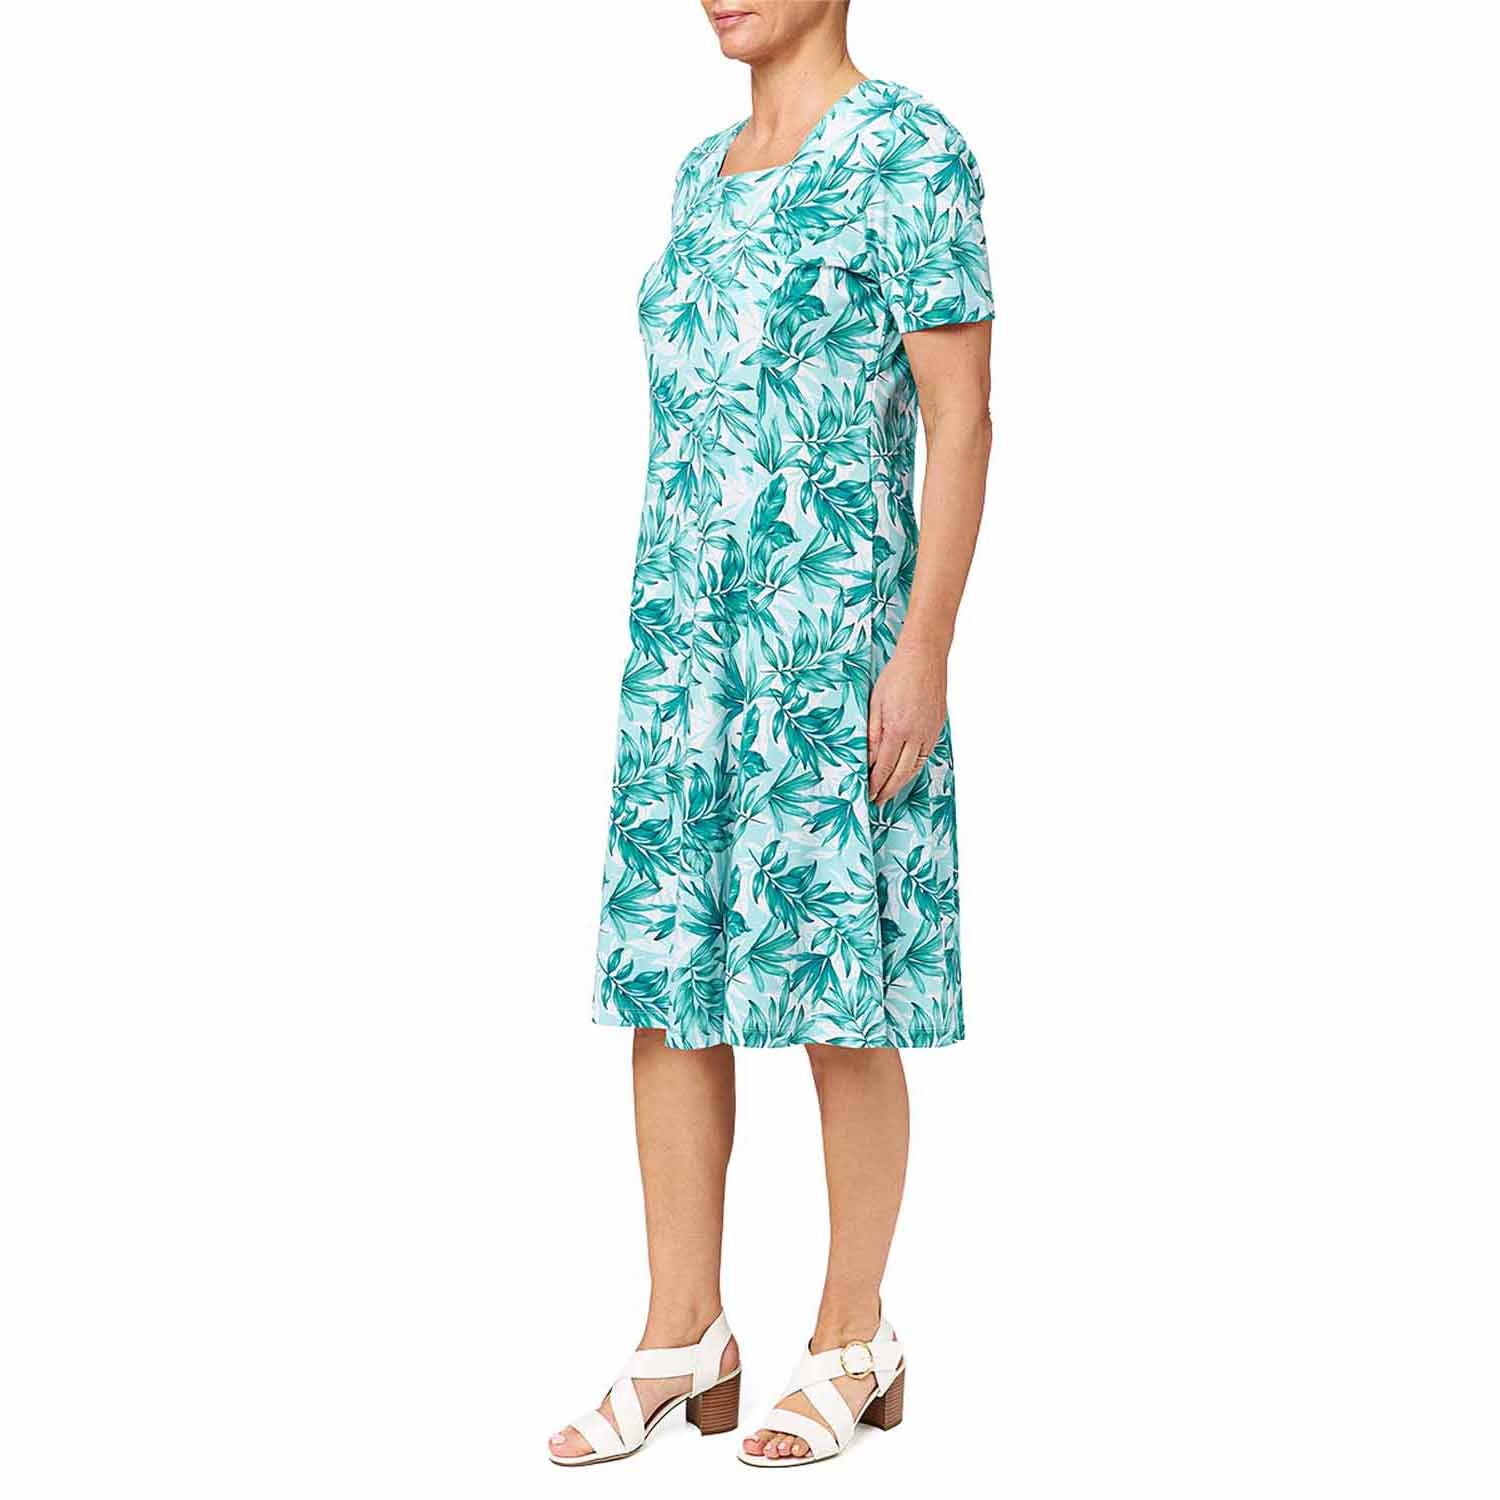 Tigiwear Leaf Print Dress - Turquoise 2 Shaws Department Stores